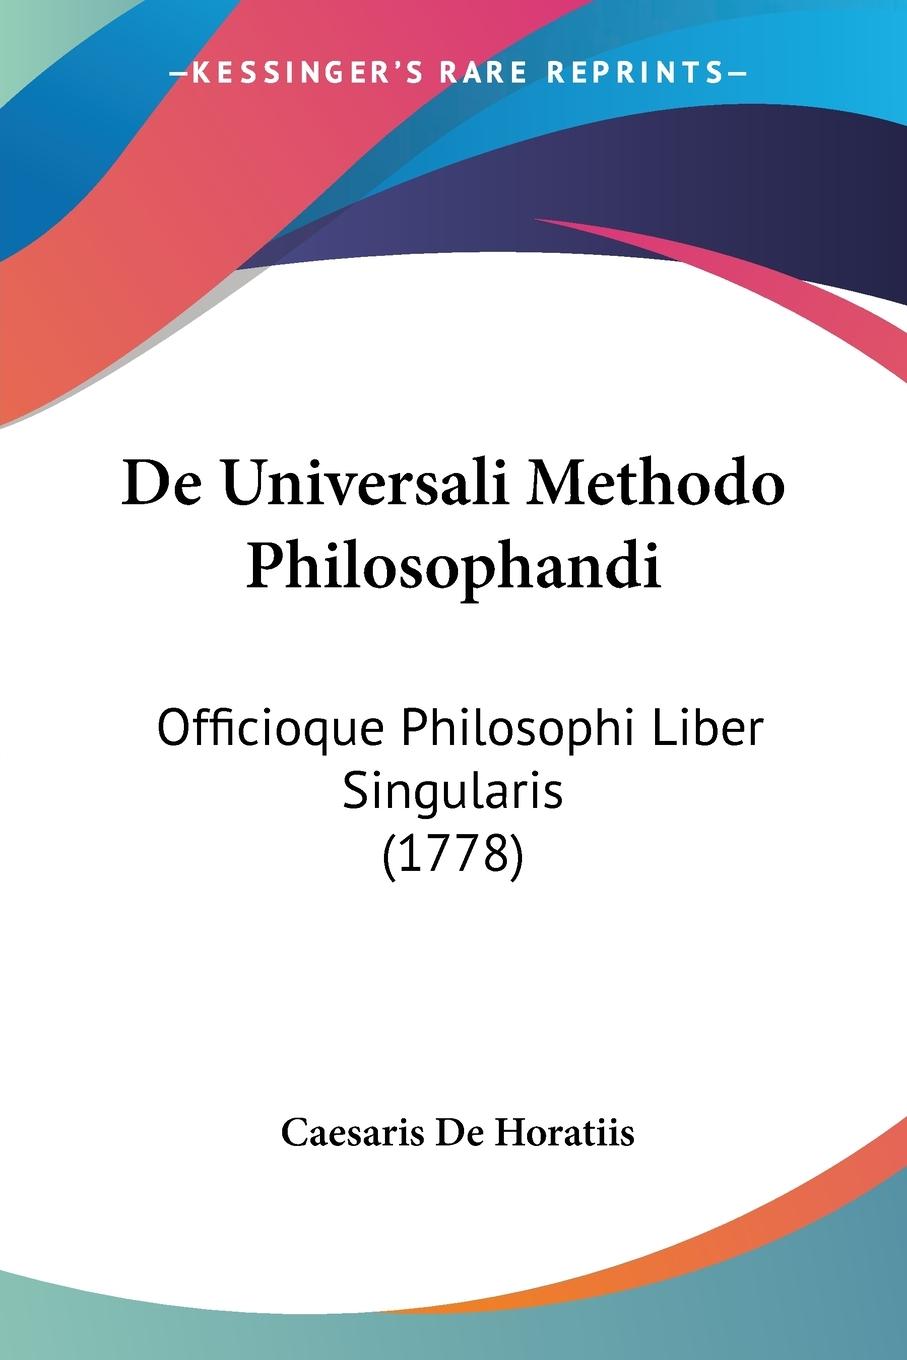 De Universali Methodo Philosophandi - Horatiis, Caesaris De